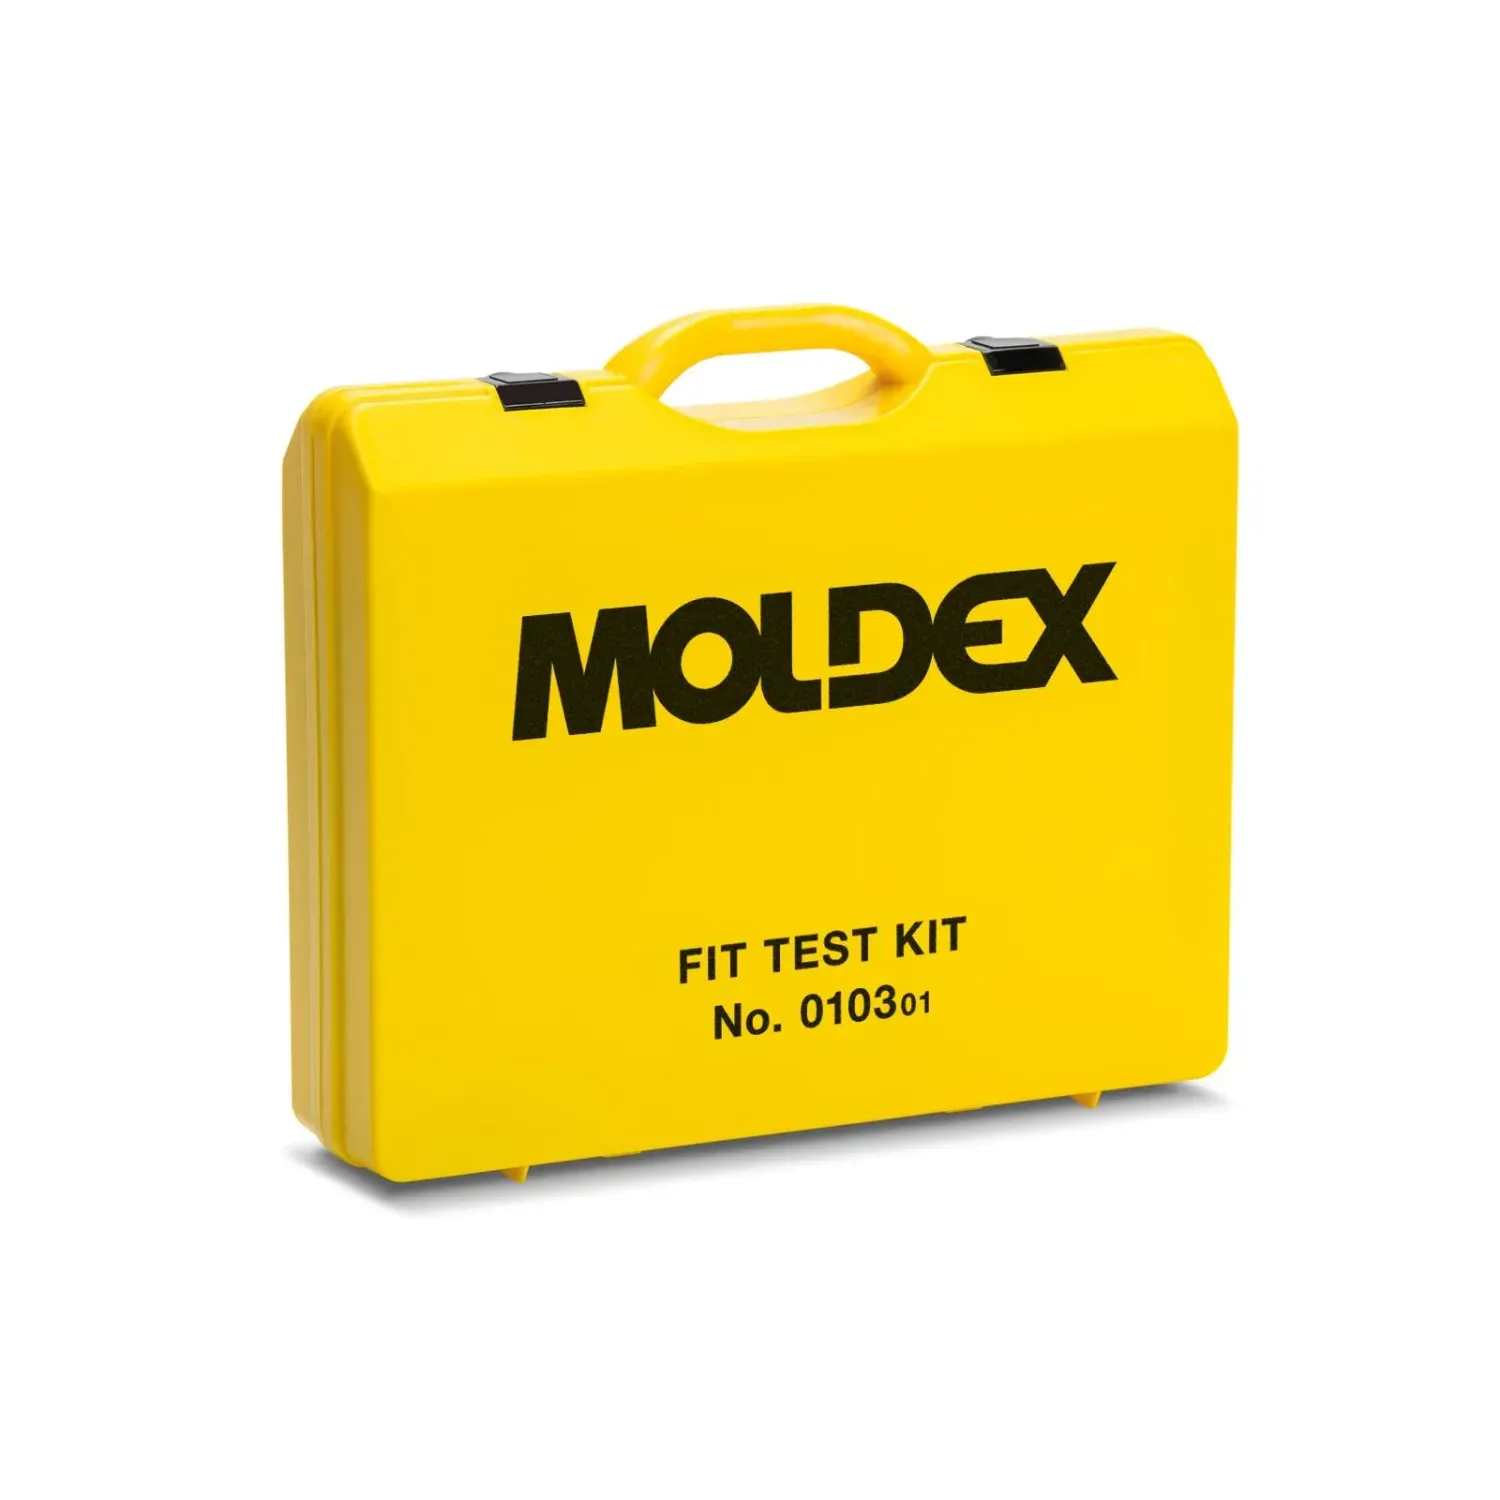 0103-01 - Fit Test Kit